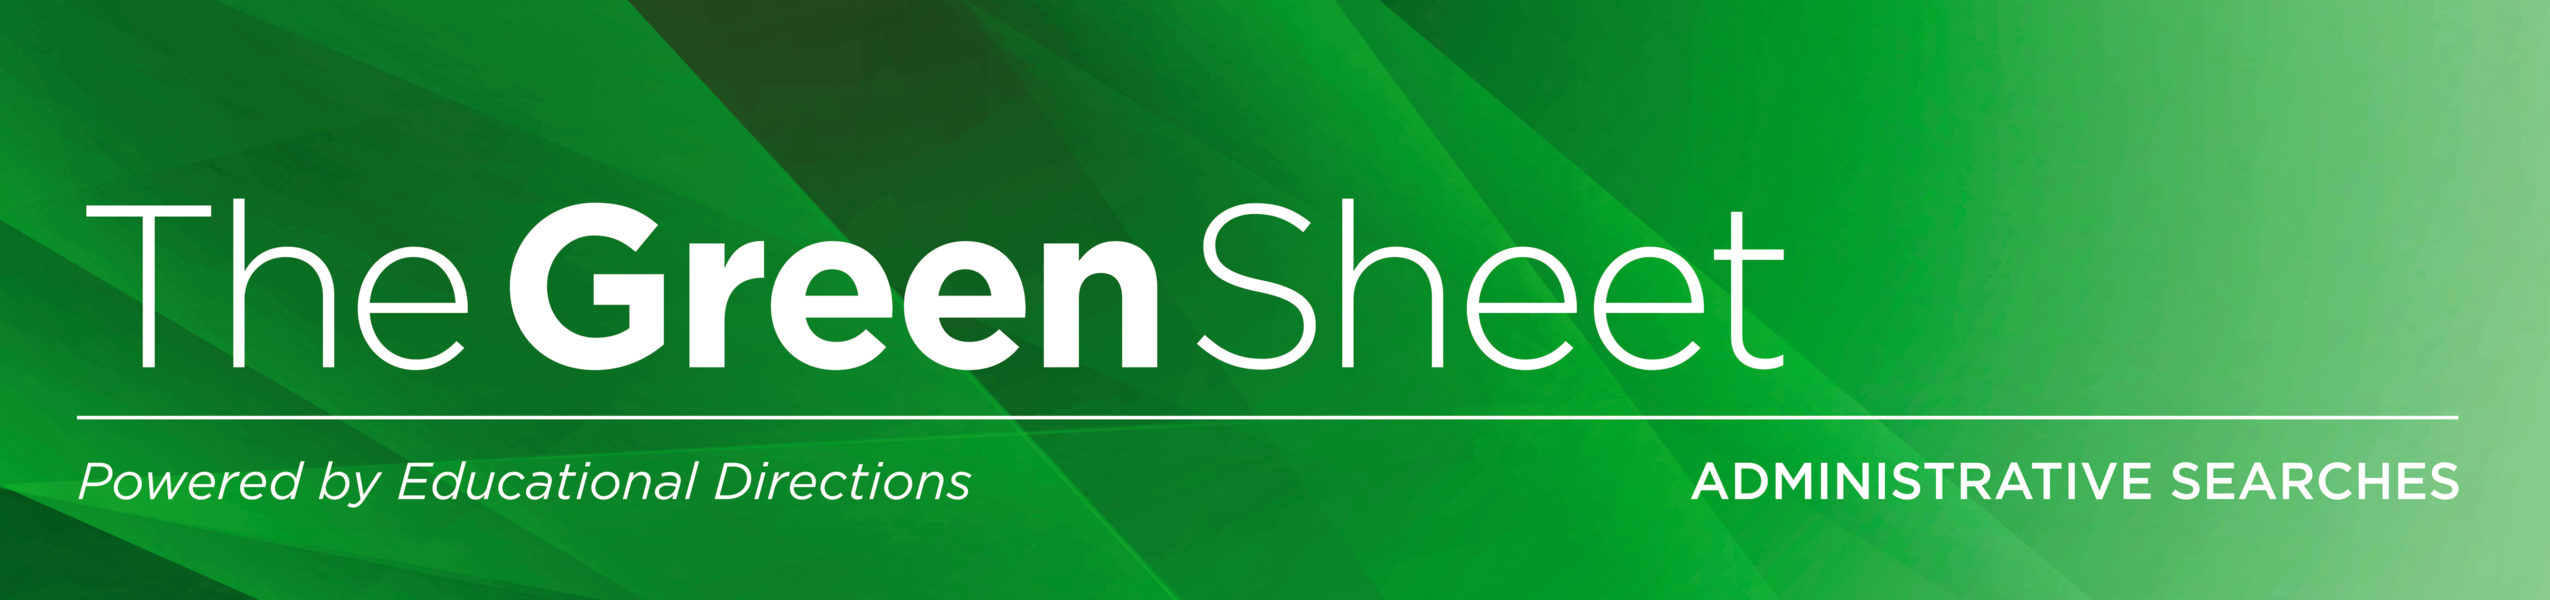 Green Sheet for Independent School Jobs